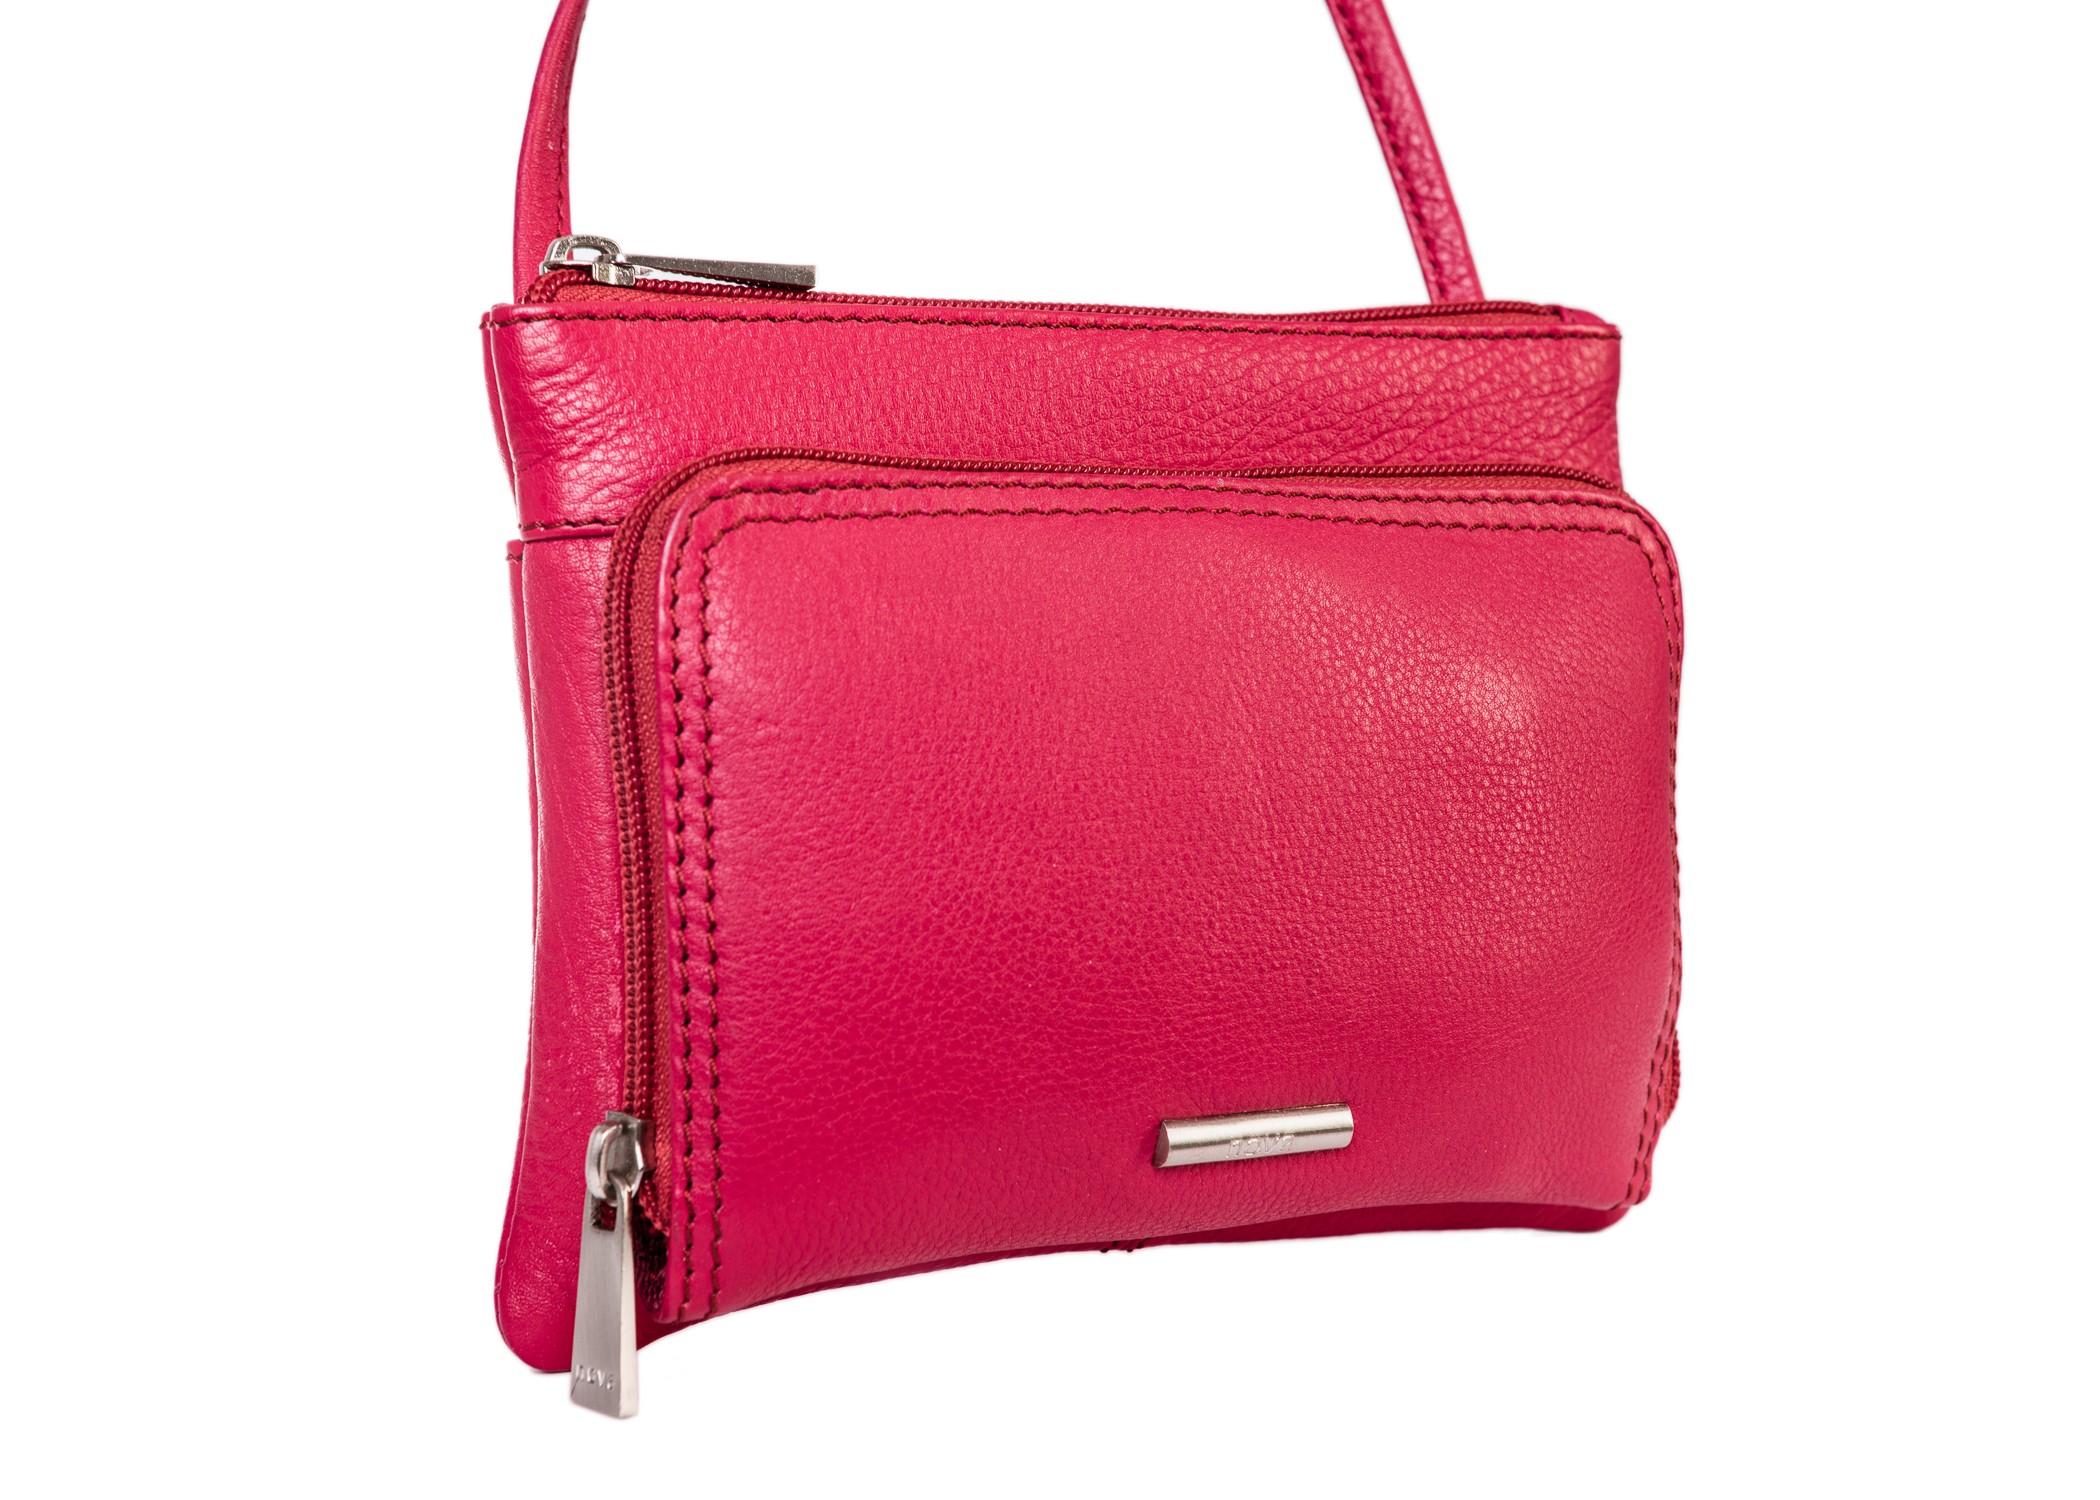 Nova 821 Leather Cross Body Handbag Pink Poppy in Nova Leather Handbags Range